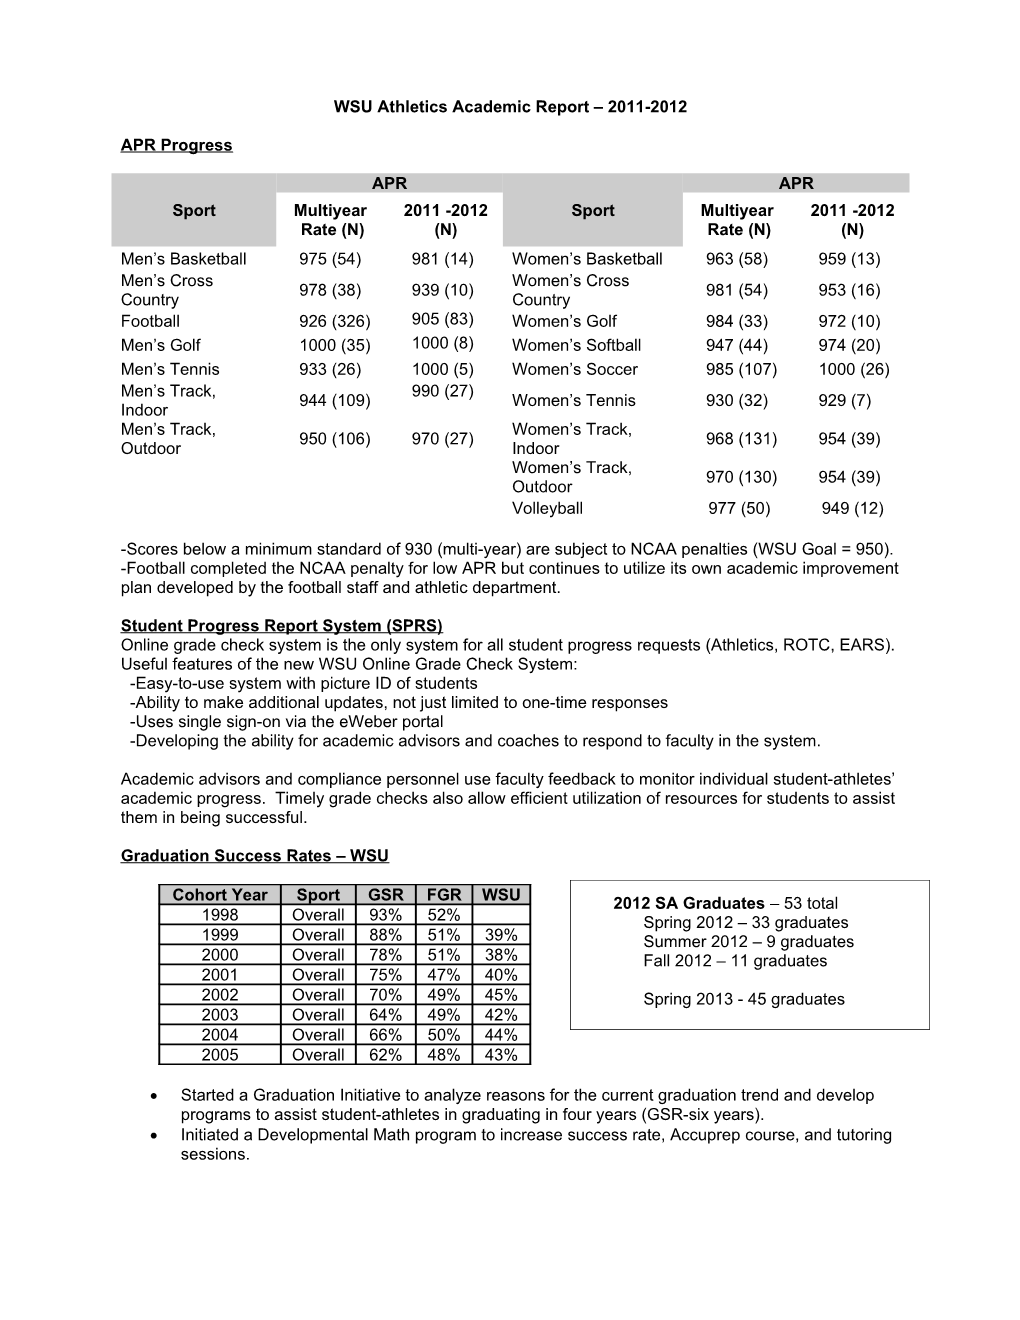 WSU Athletics Academic Report 2011-2012